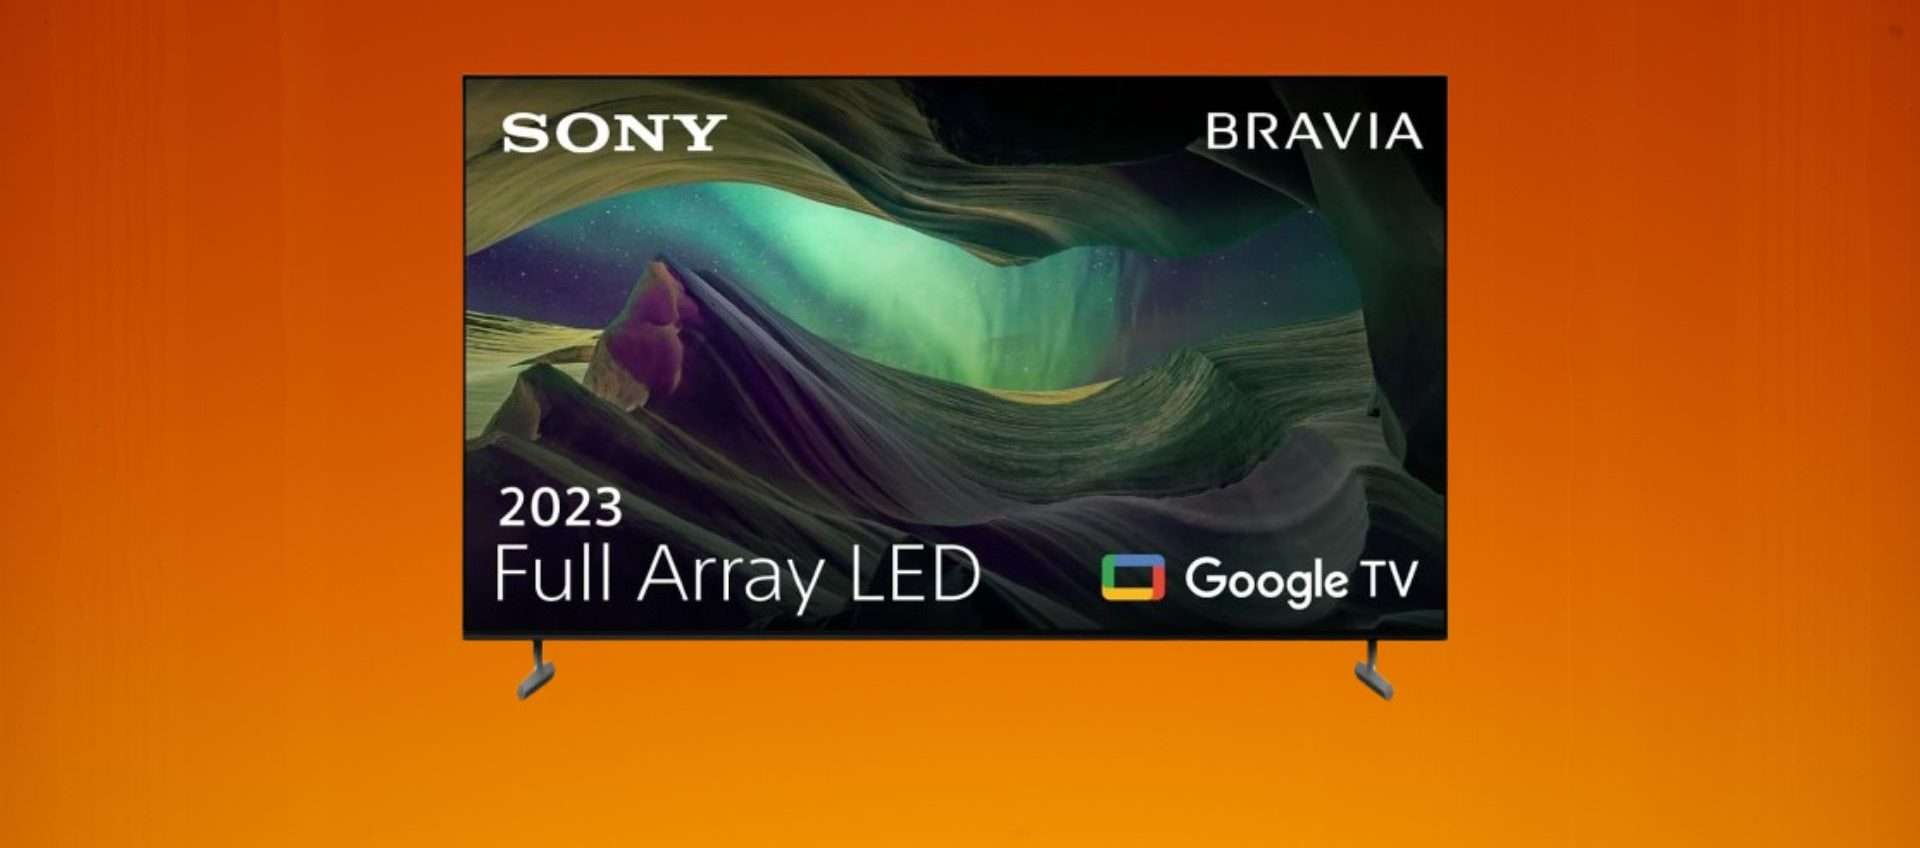 Smart TV 4K Sony Bravia in offerta su Amazon: risparmi 100€